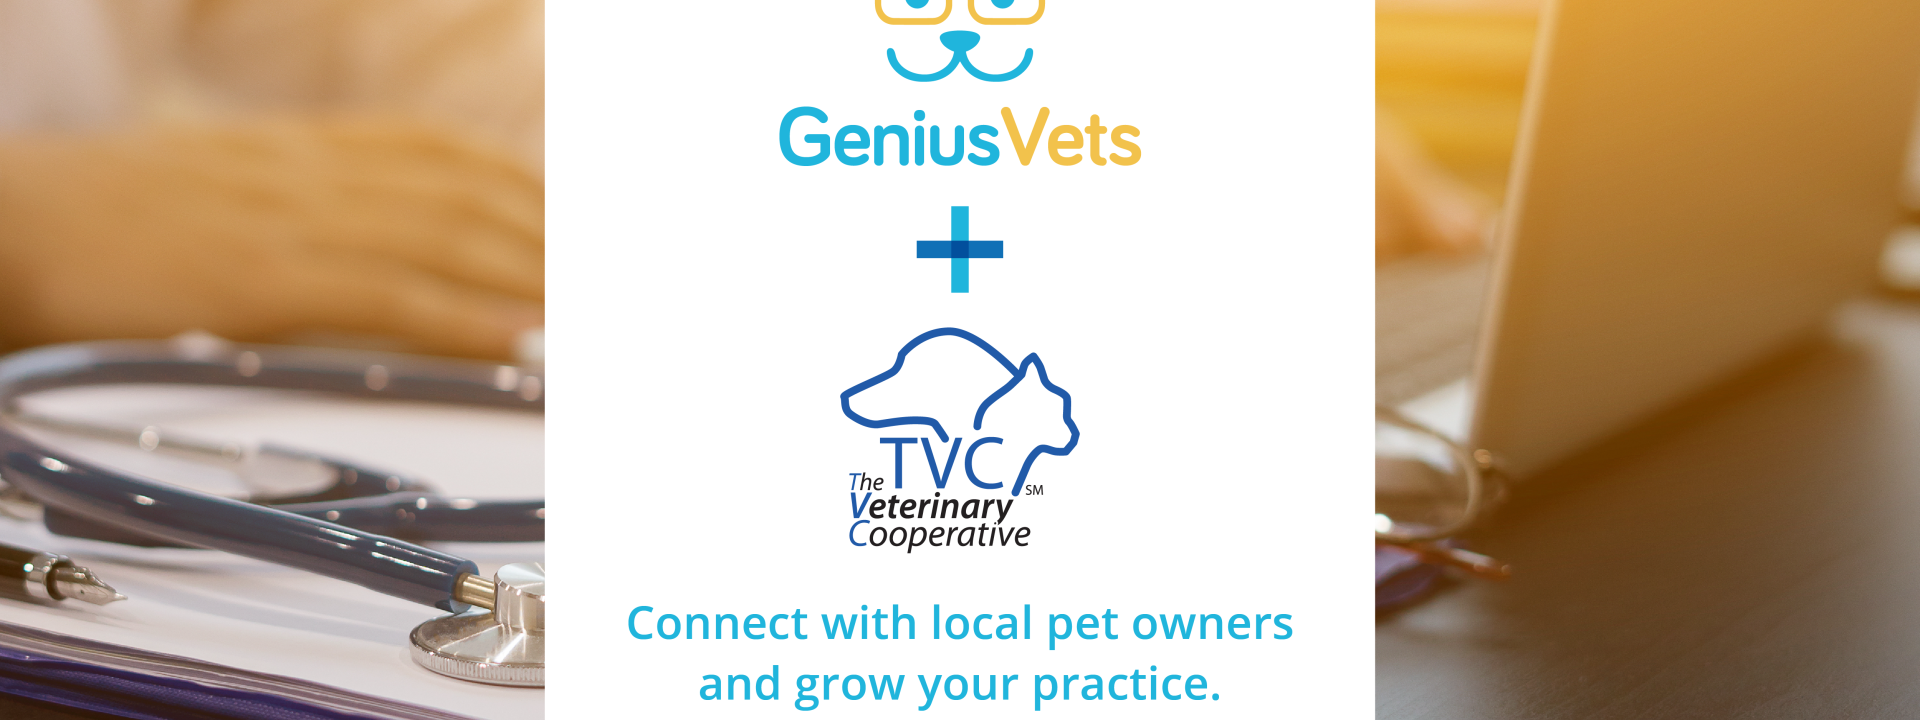 GeniusVets and The Veterinary Cooperative Partnership